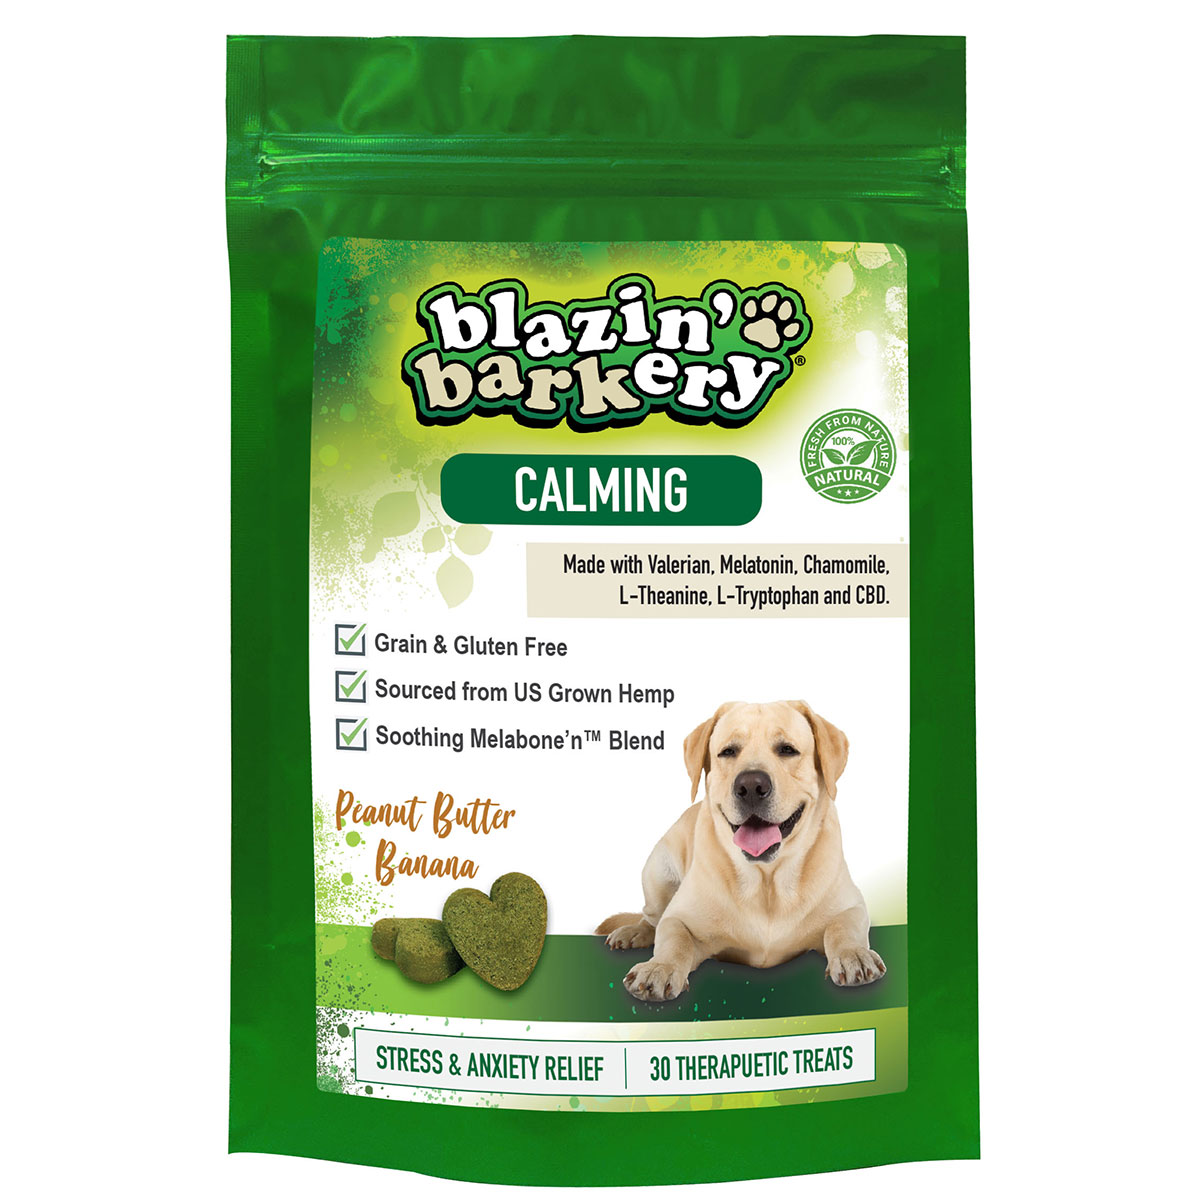 Blazin' Barkery Calming Hemp CBD Dog Treats